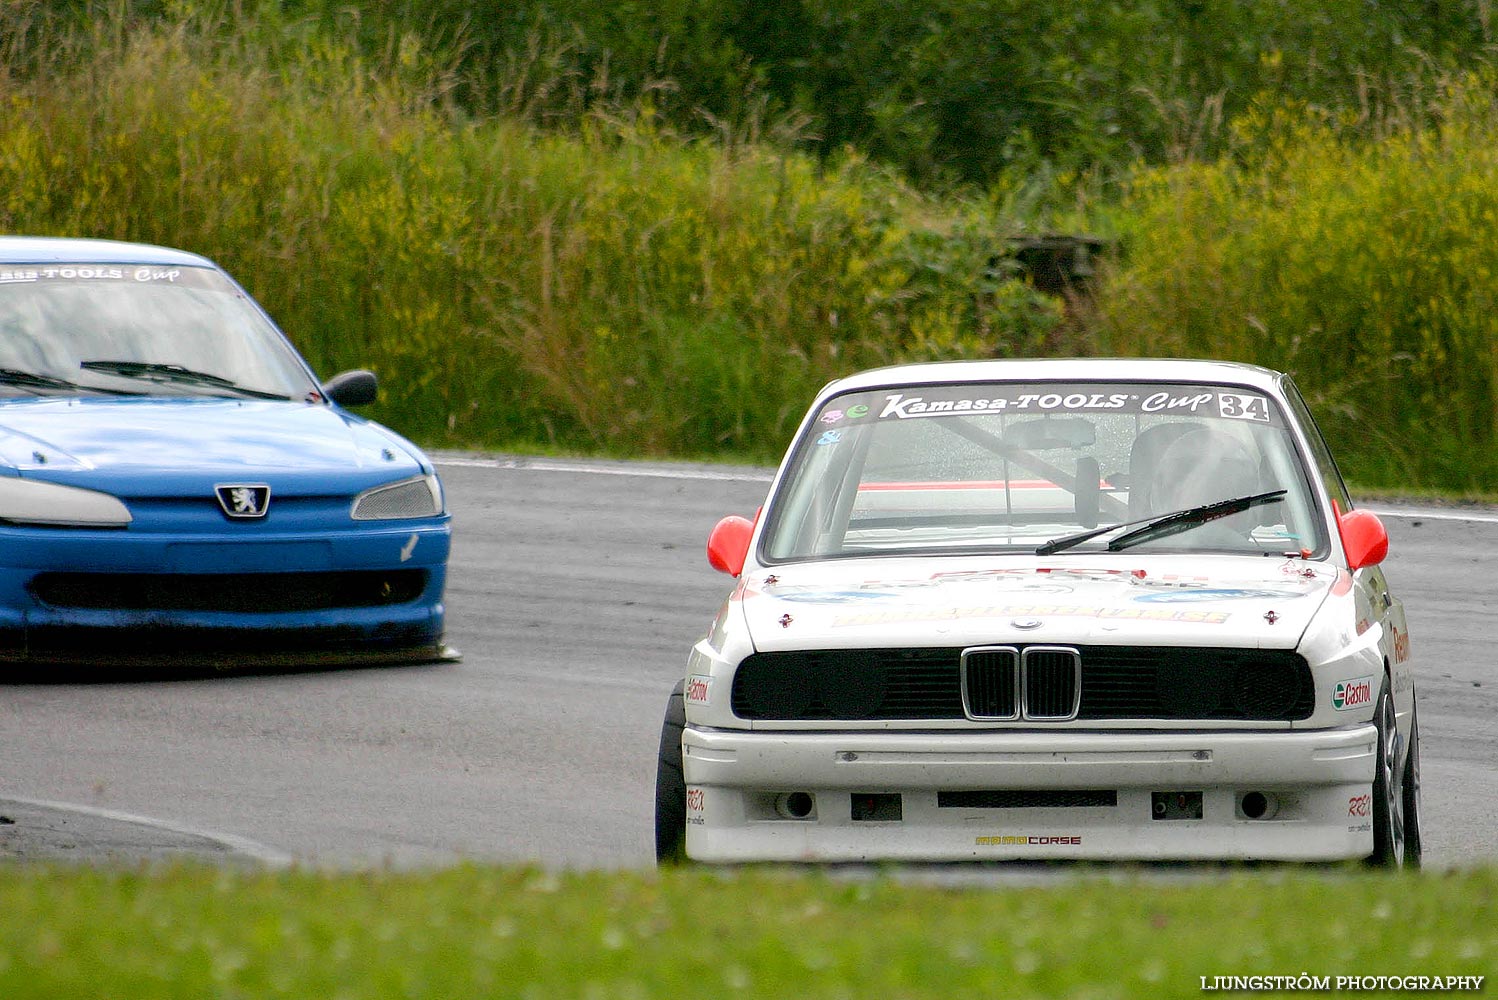 SSK Raceweek,mix,Kinnekulle Ring,Götene,Sverige,Motorsport,,2004,92432